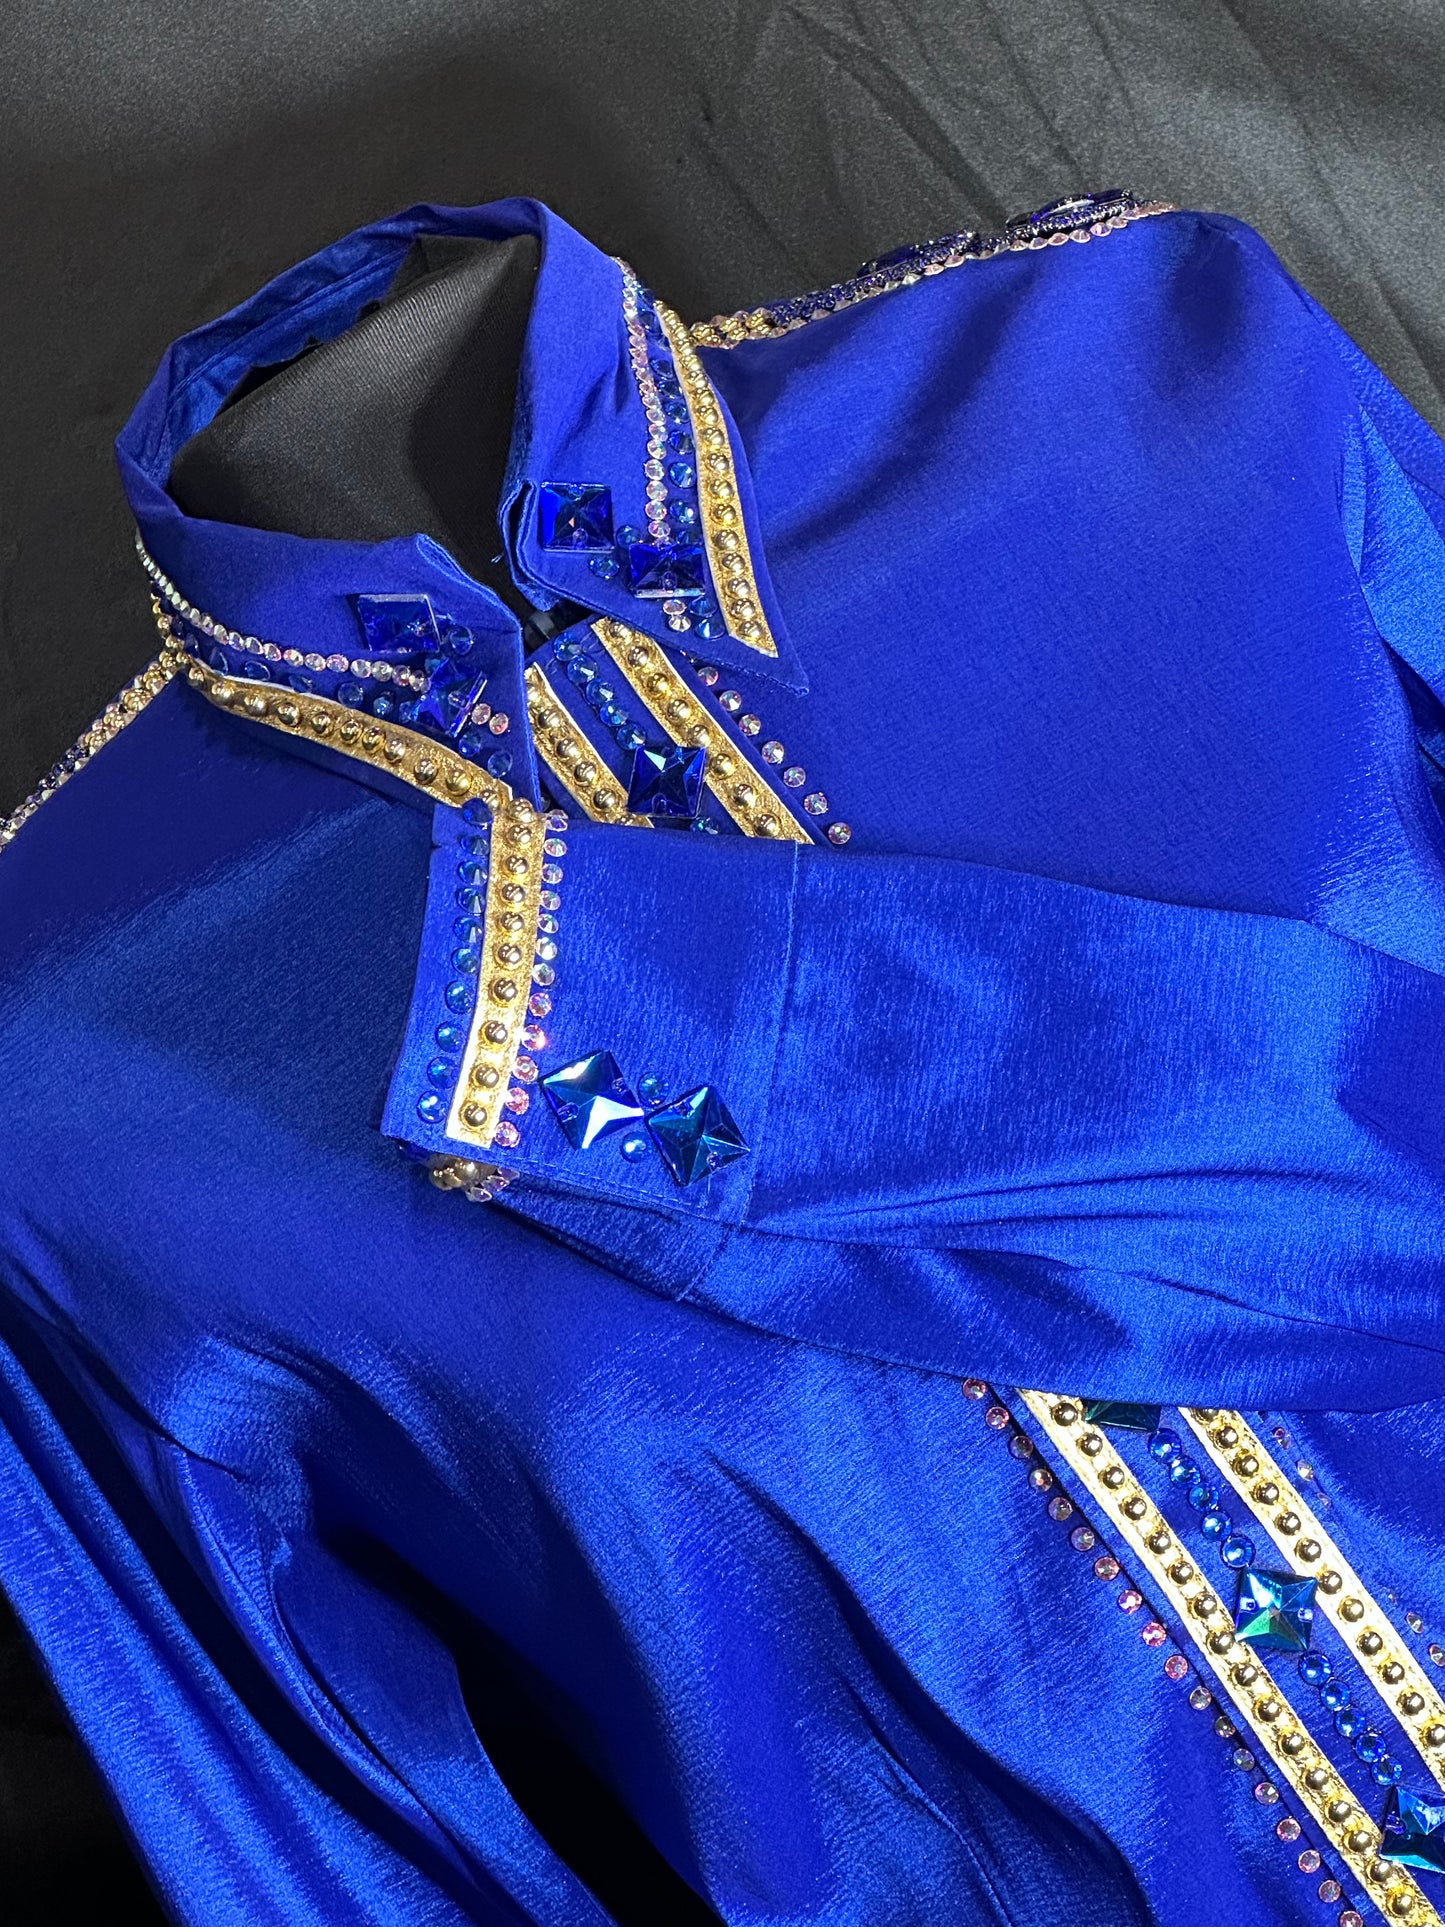 Size Extra-Large day shirt stretch Royal Blue taffeta hidden zipper